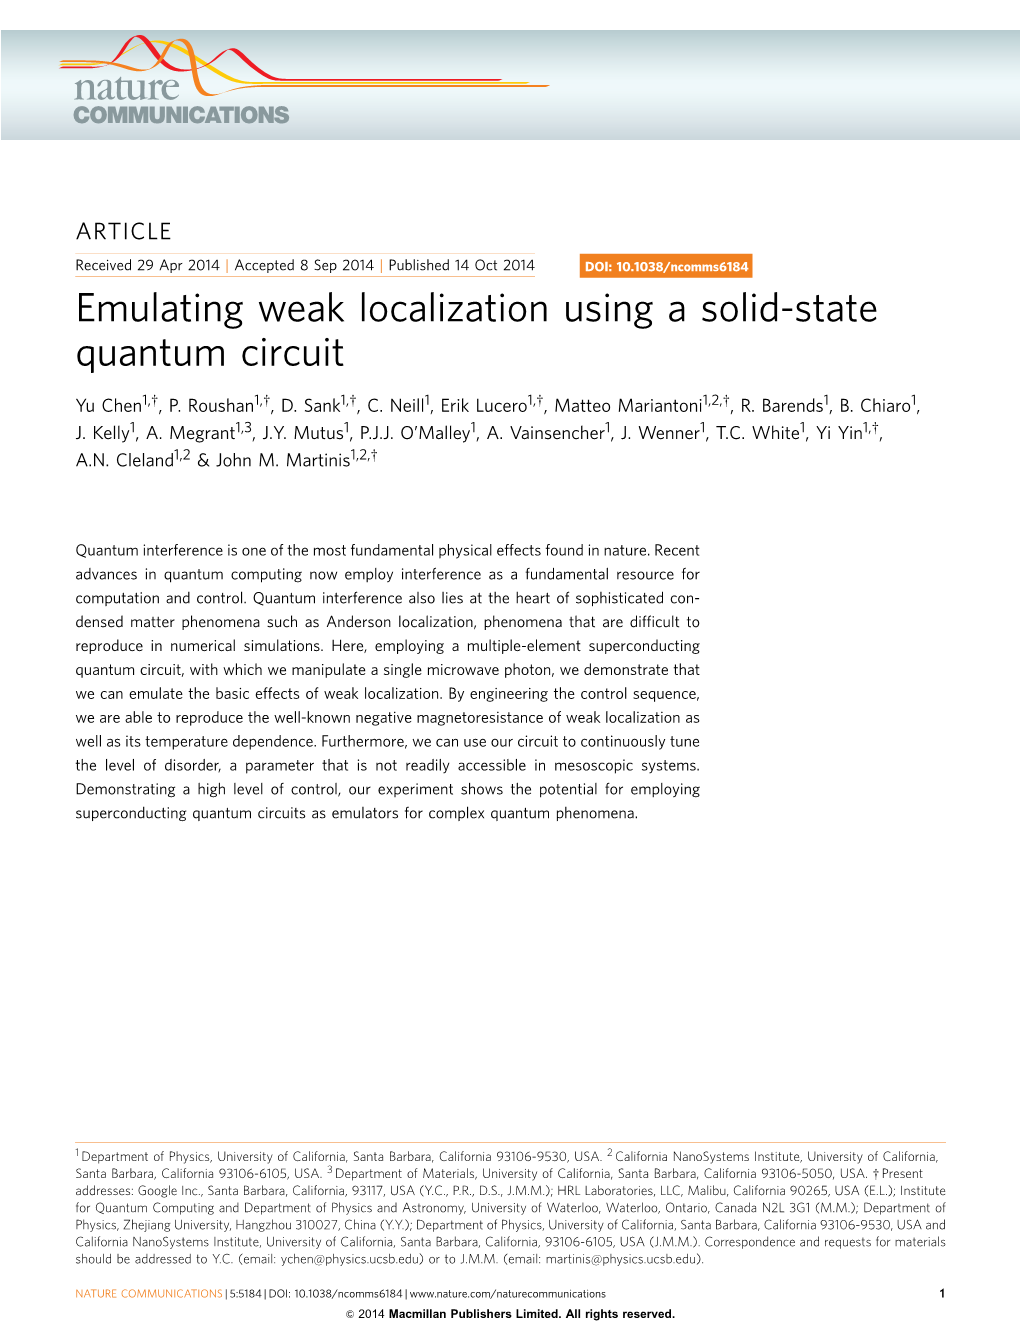 Emulating Weak Localization Using a Solid-State Quantum Circuit